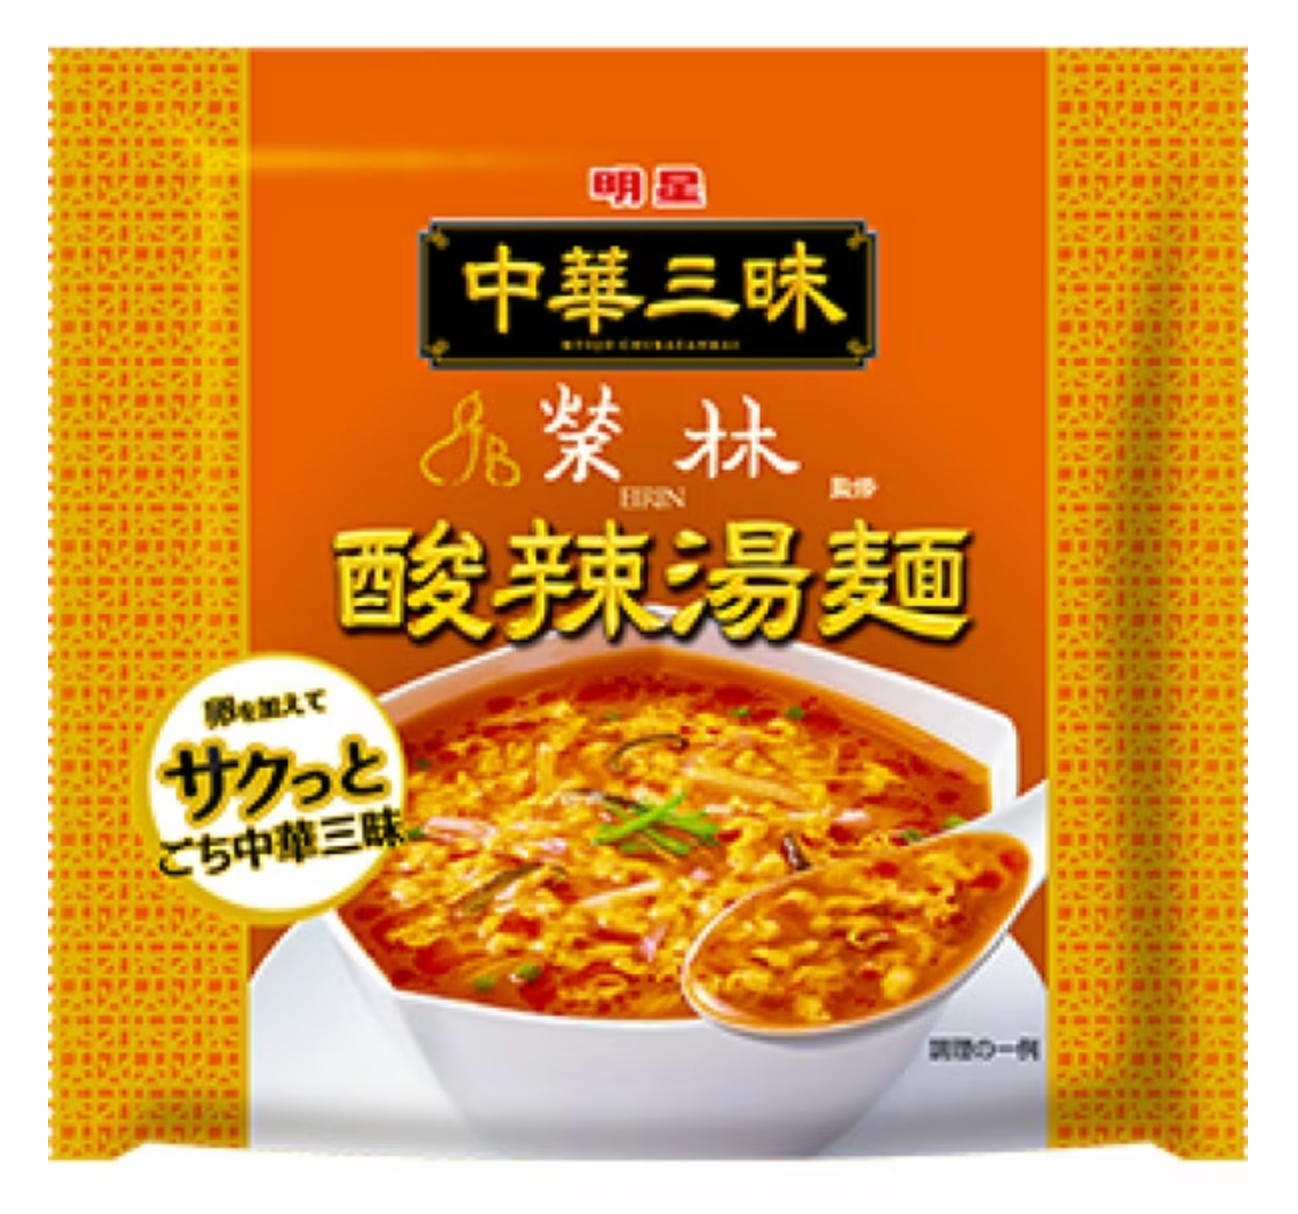 Myojo Ippeichan Chukazanmai Hot and Sour Soup Ramen Instant Noodles 103g (Pack of 3)